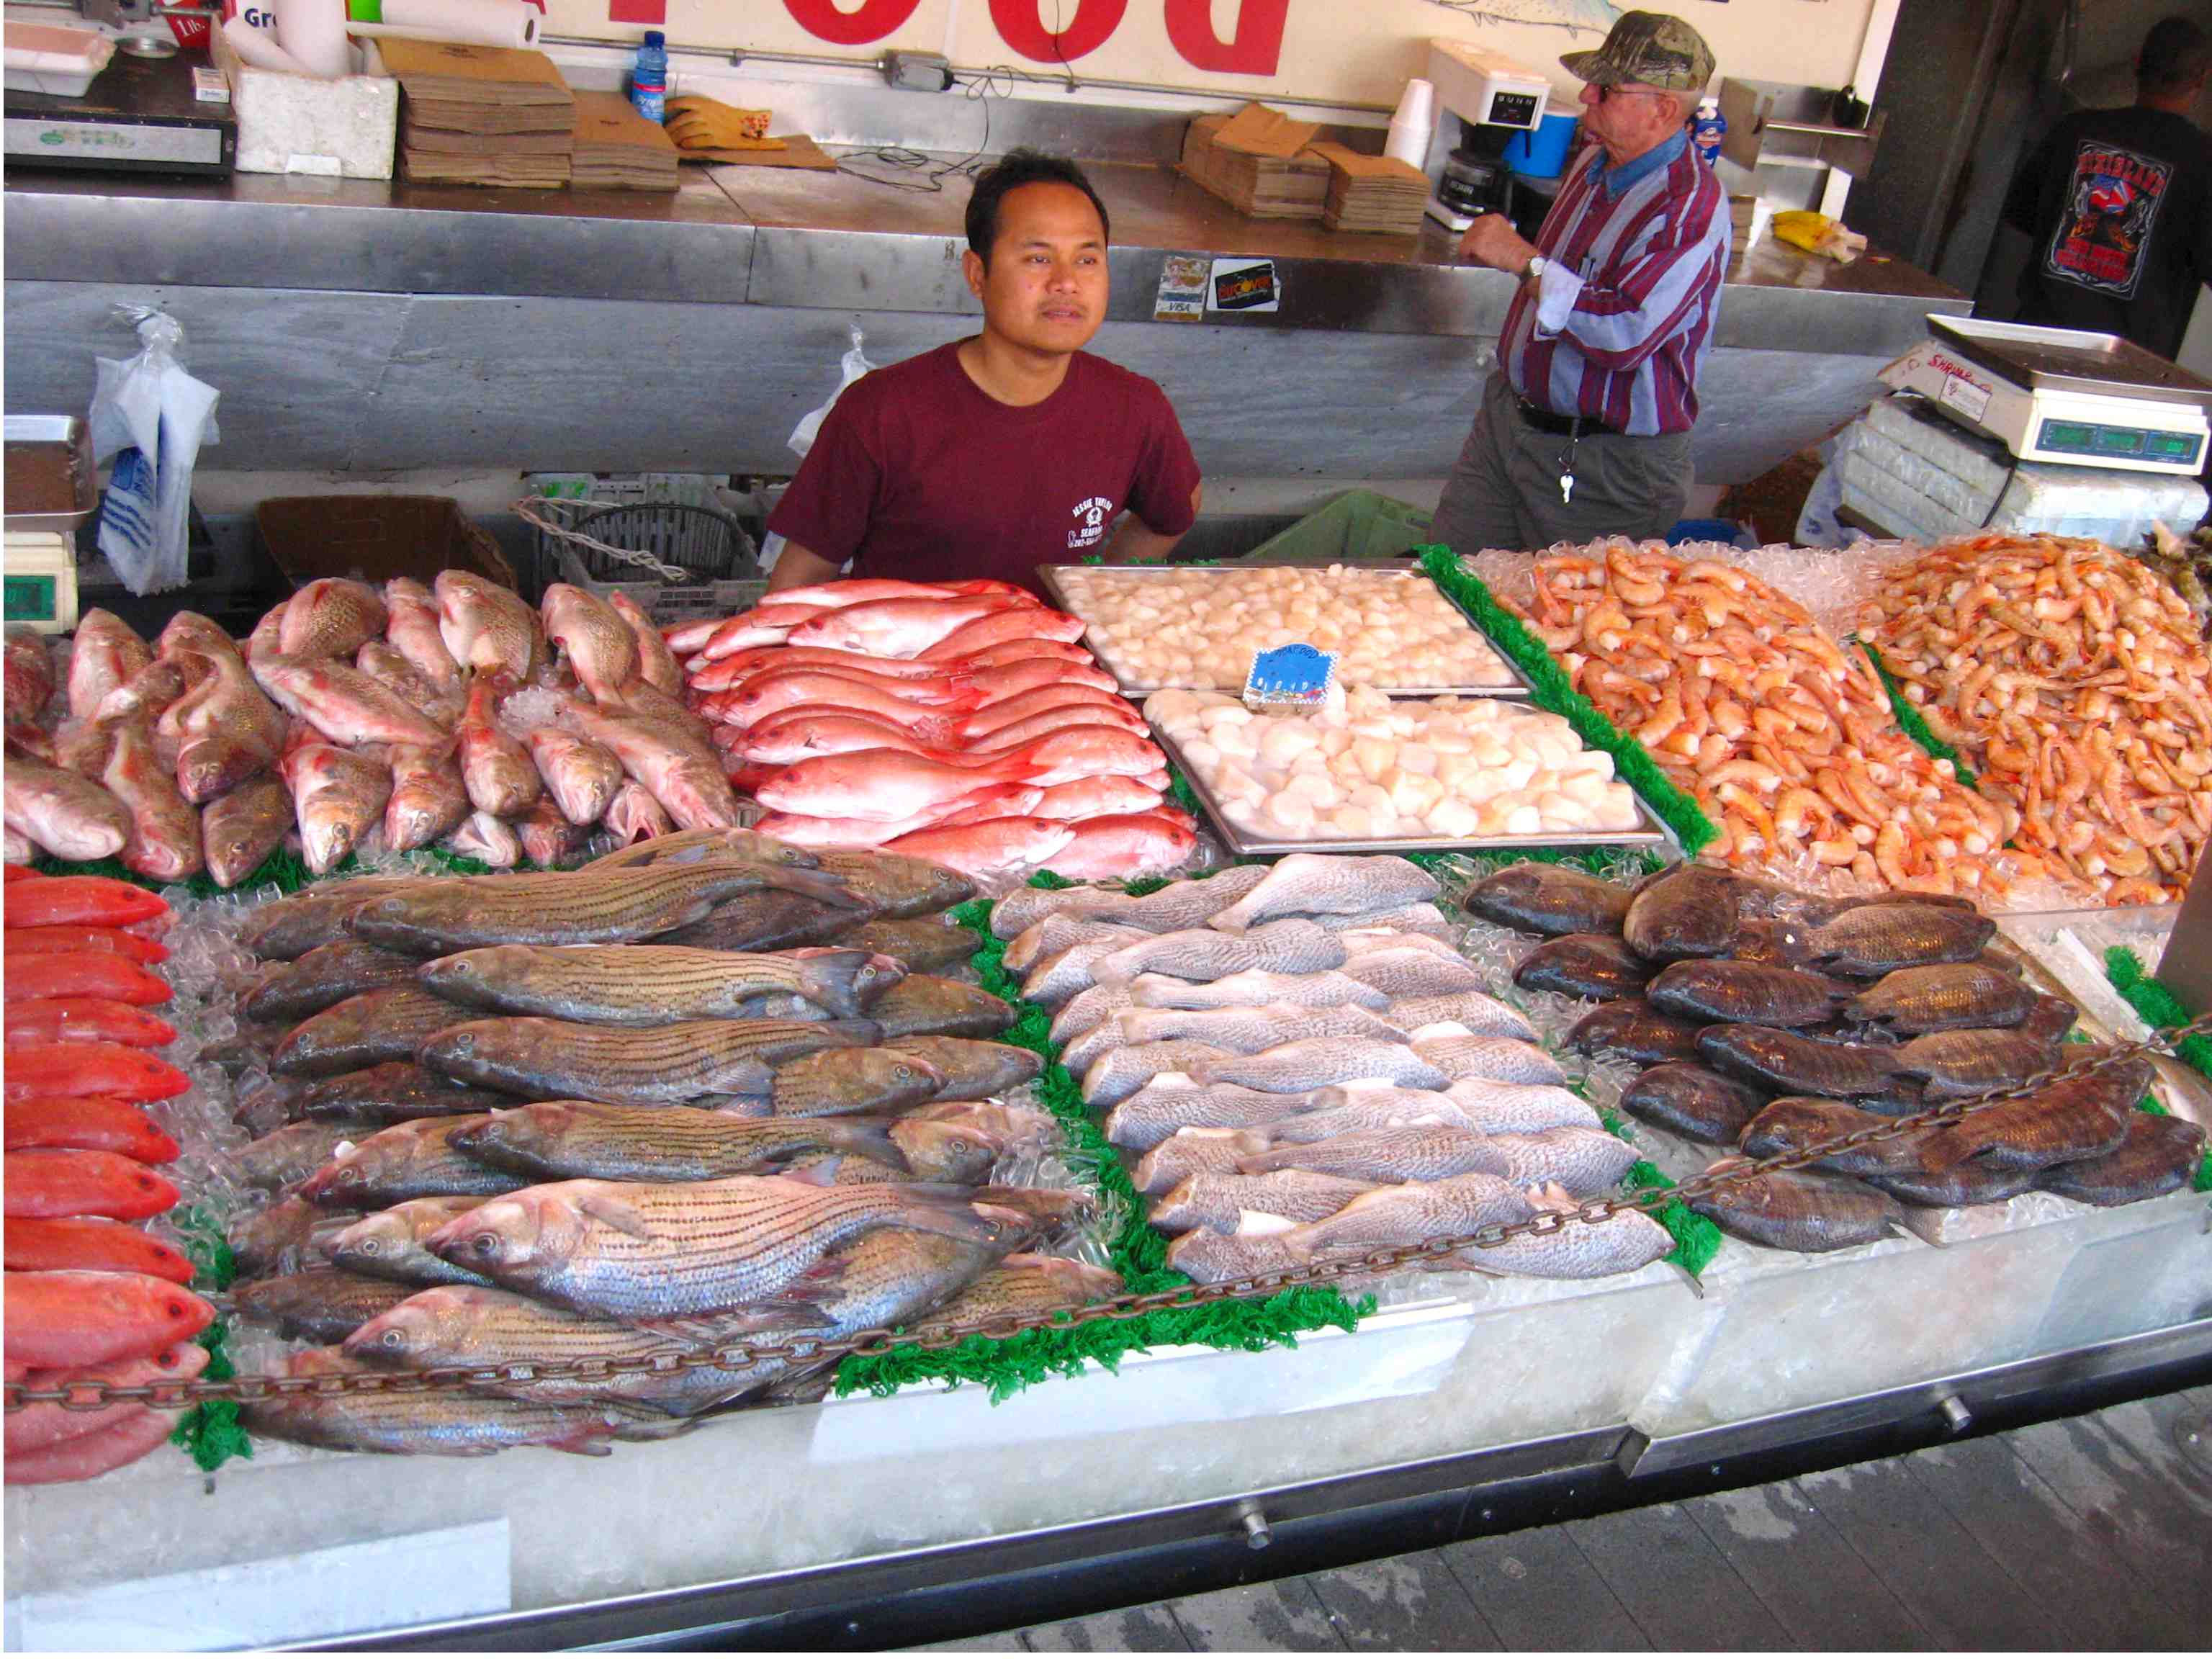 Рыбный прилавок. Рыбный рынок Мале. Рыбный рынок Мале Мальдивы. Рыба на рынке. Прилавок с рыбой на рынке.